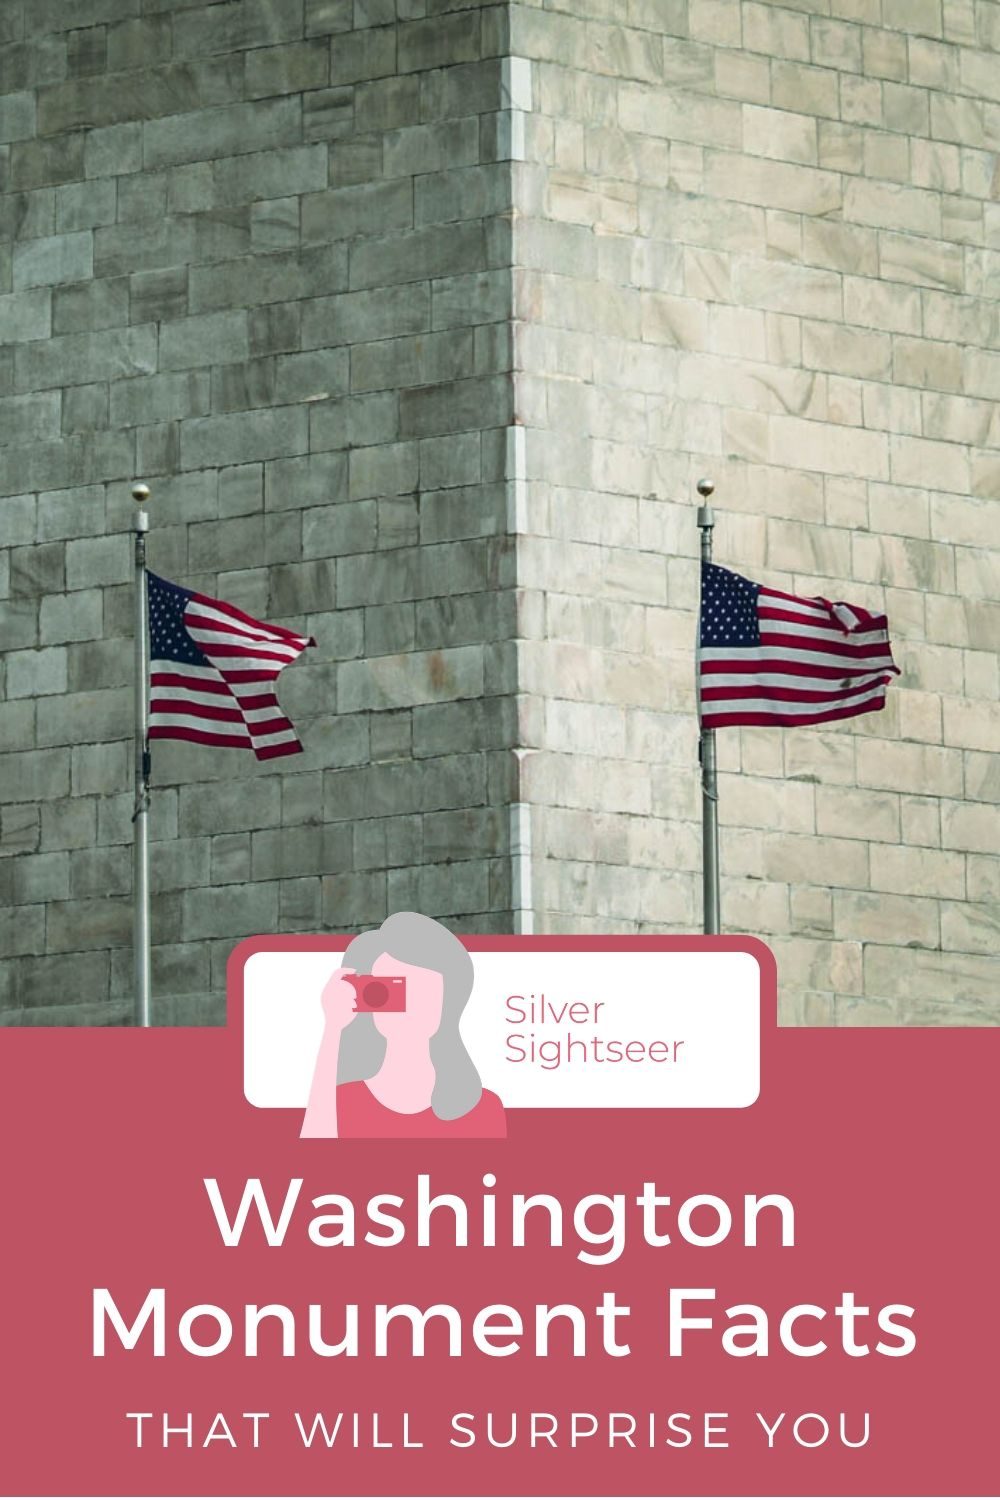 Washington Monument Facts - Pin 1 - JPG